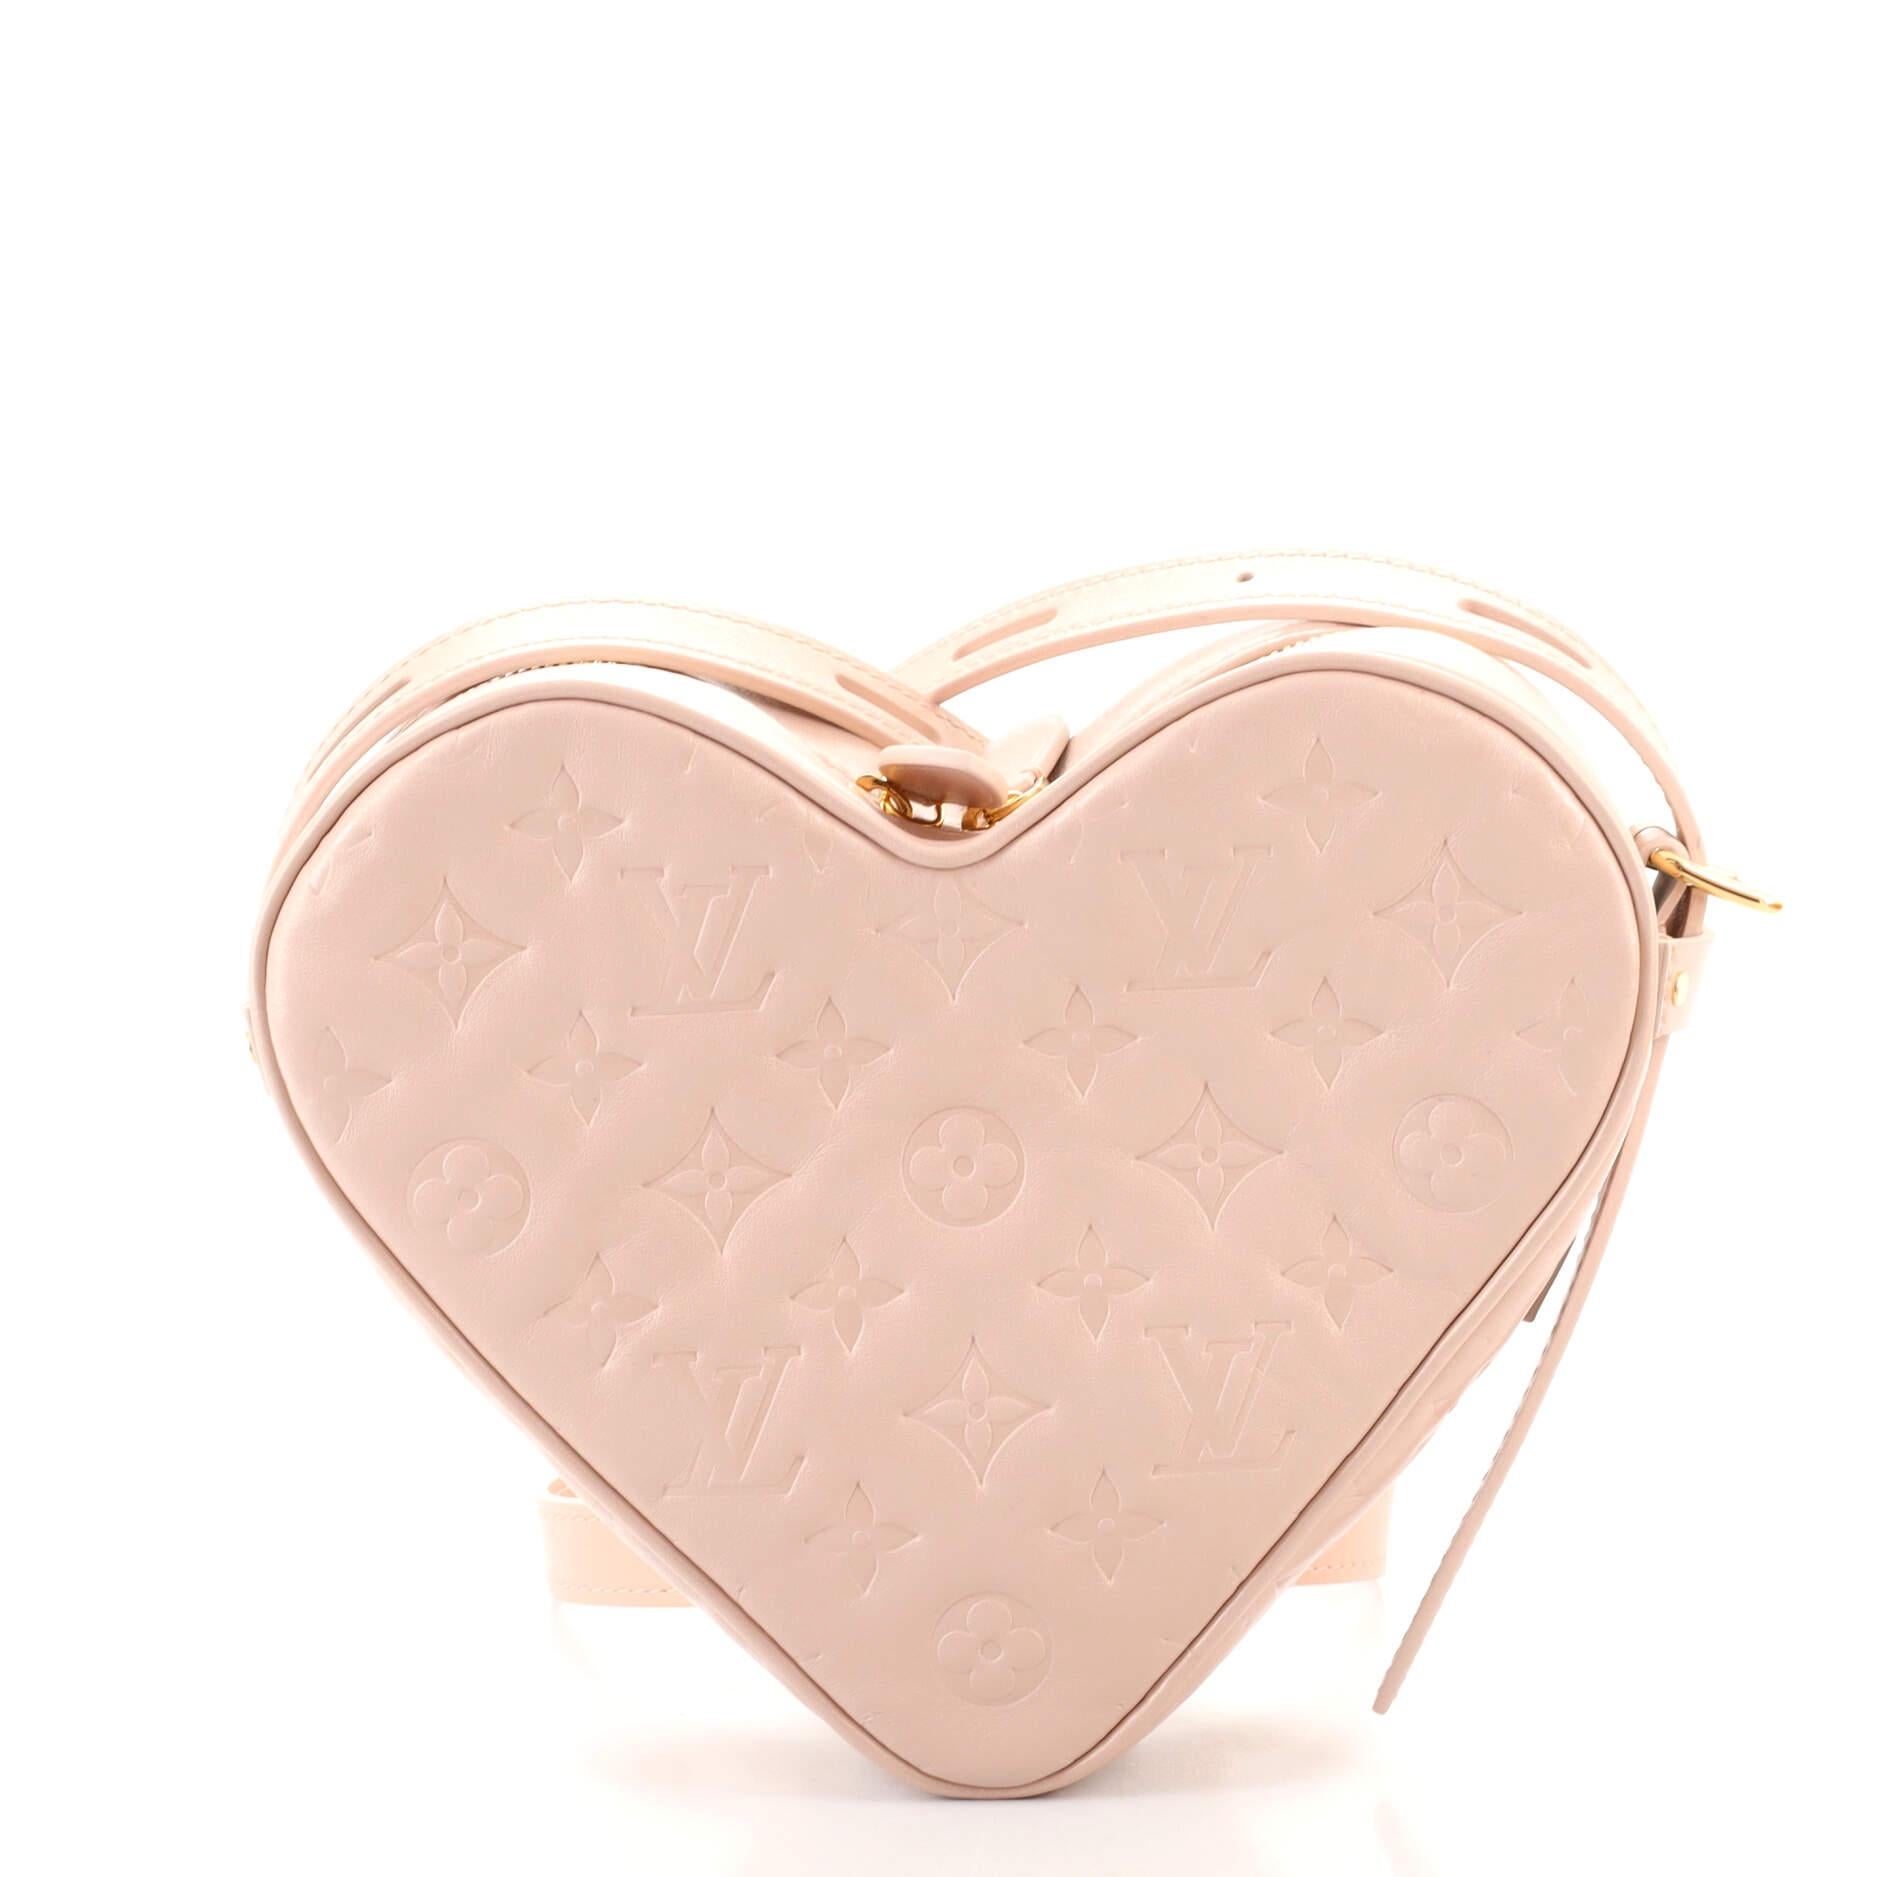 Beige Louis Vuitton Coeur Handbag Limited Edition Fall in Love Monogram Embossed